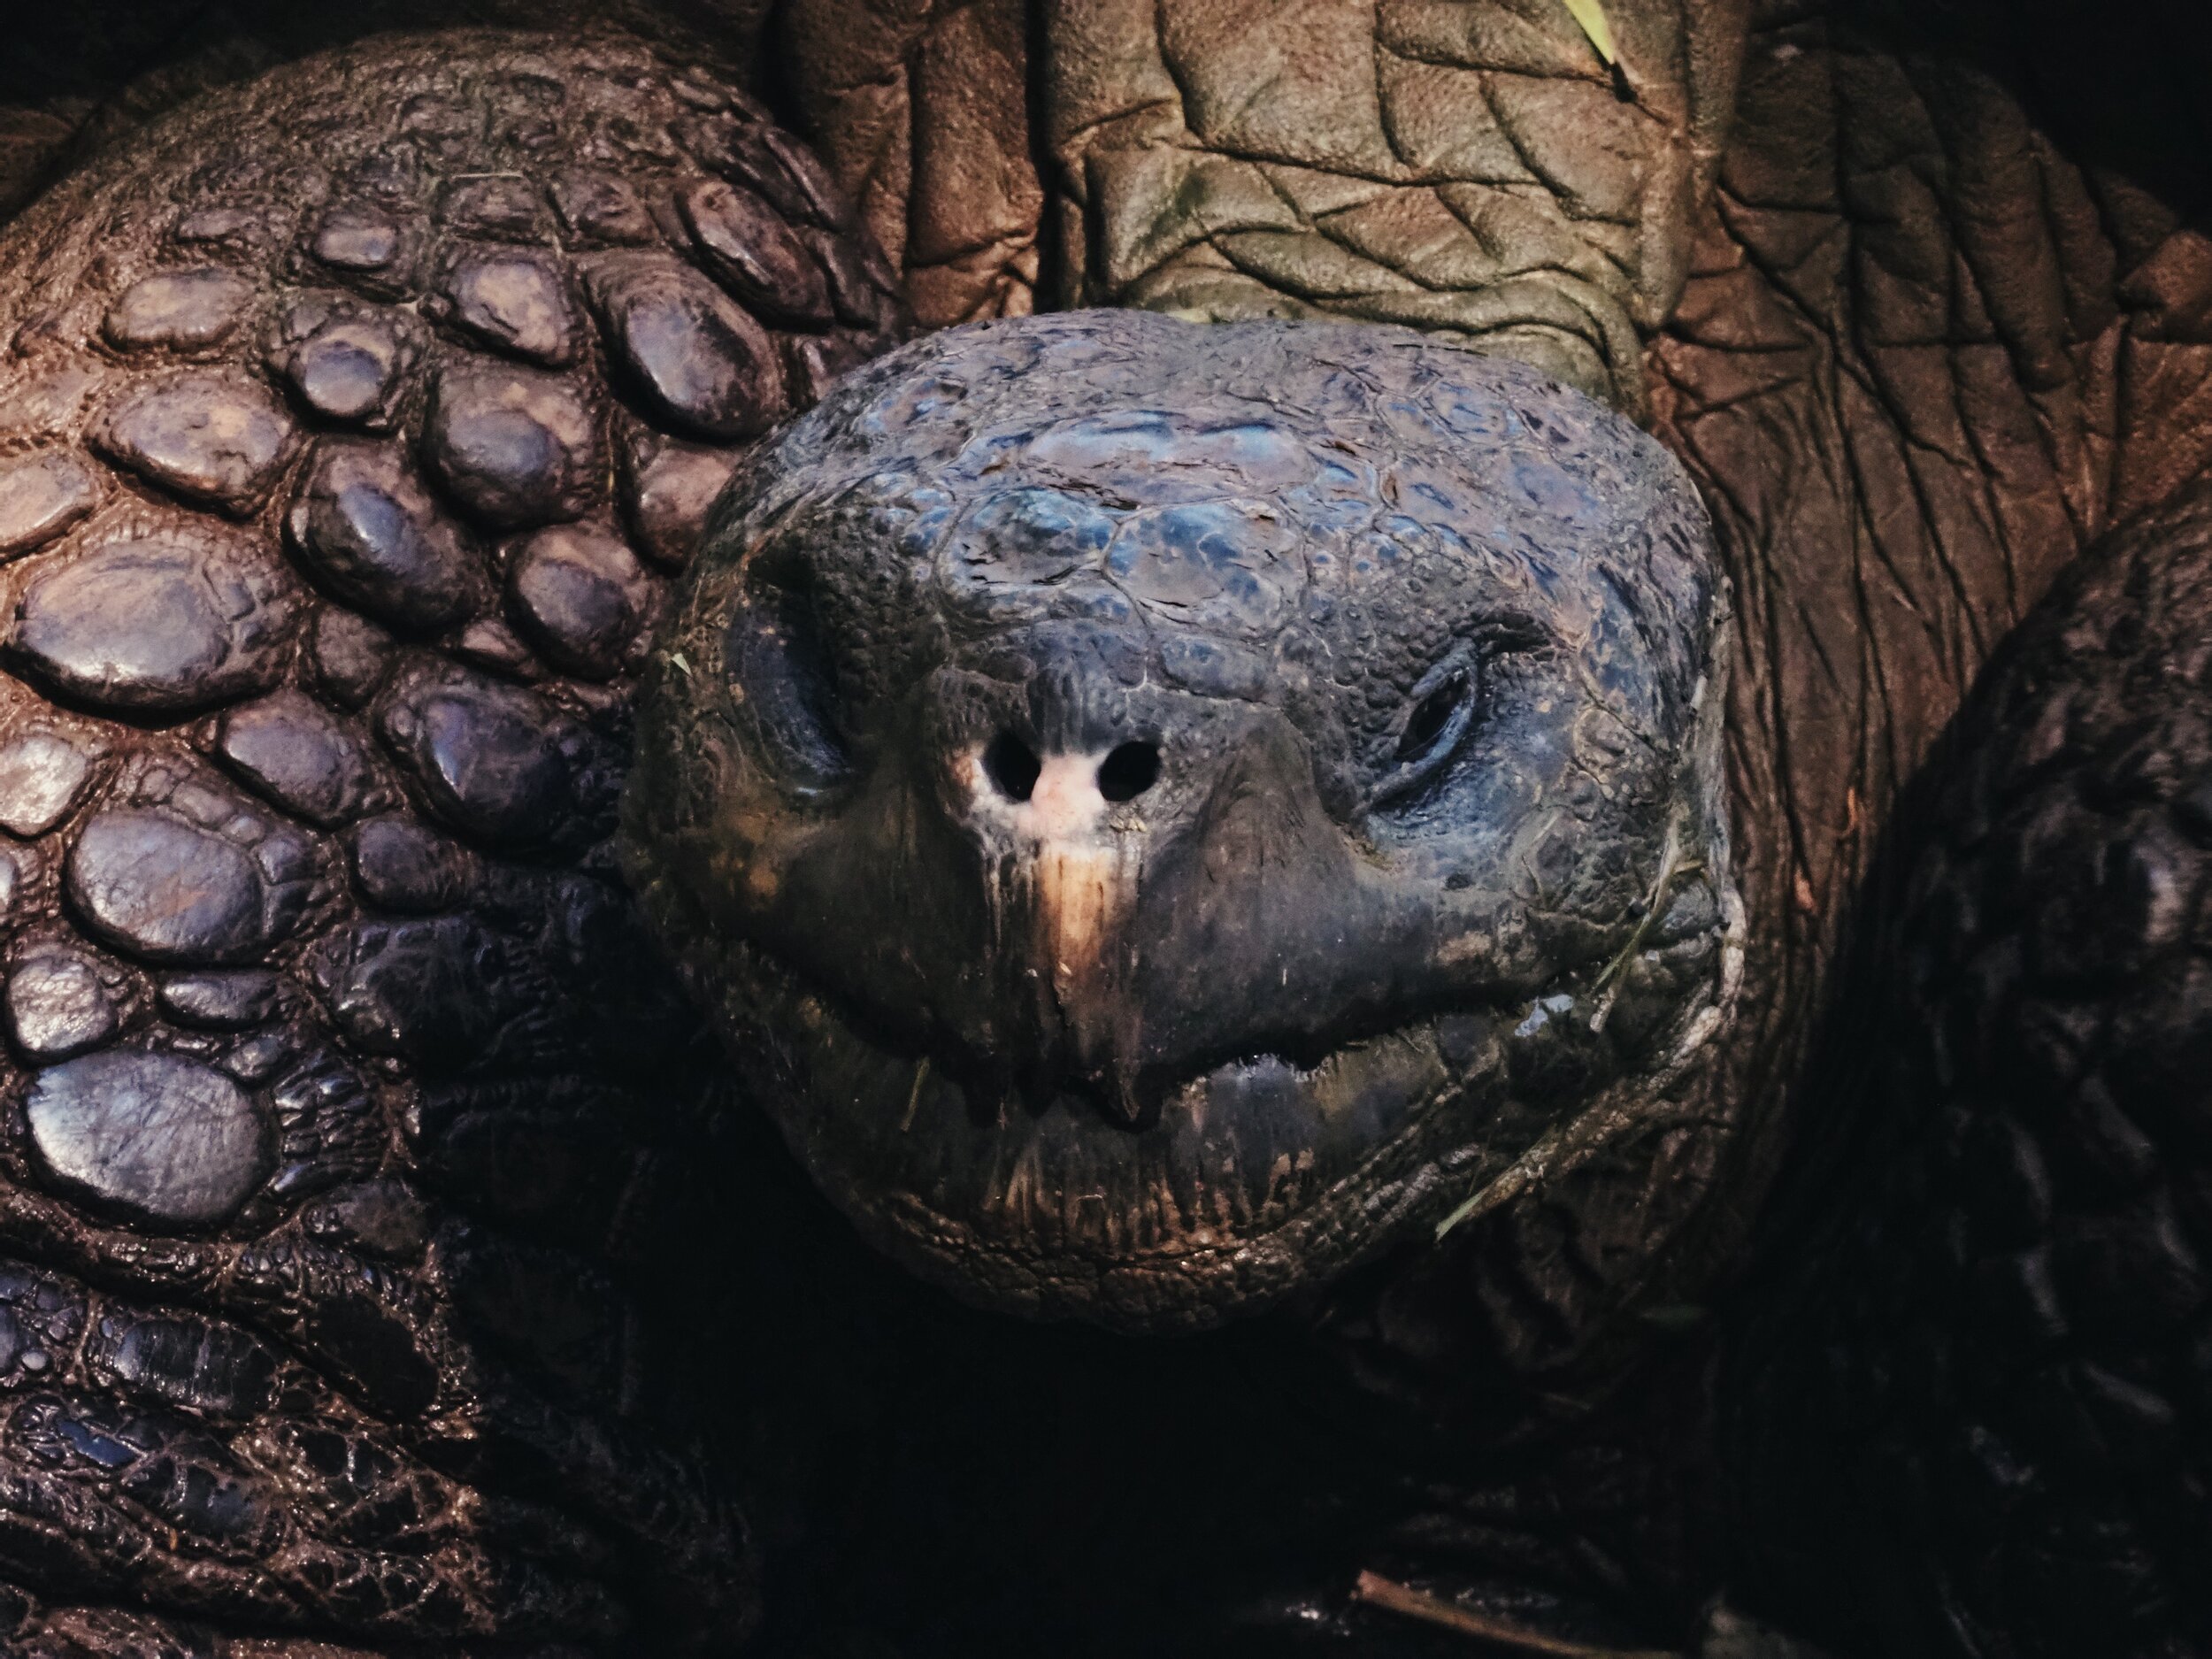  the same friendly giant tortoise, Santa Cruz 